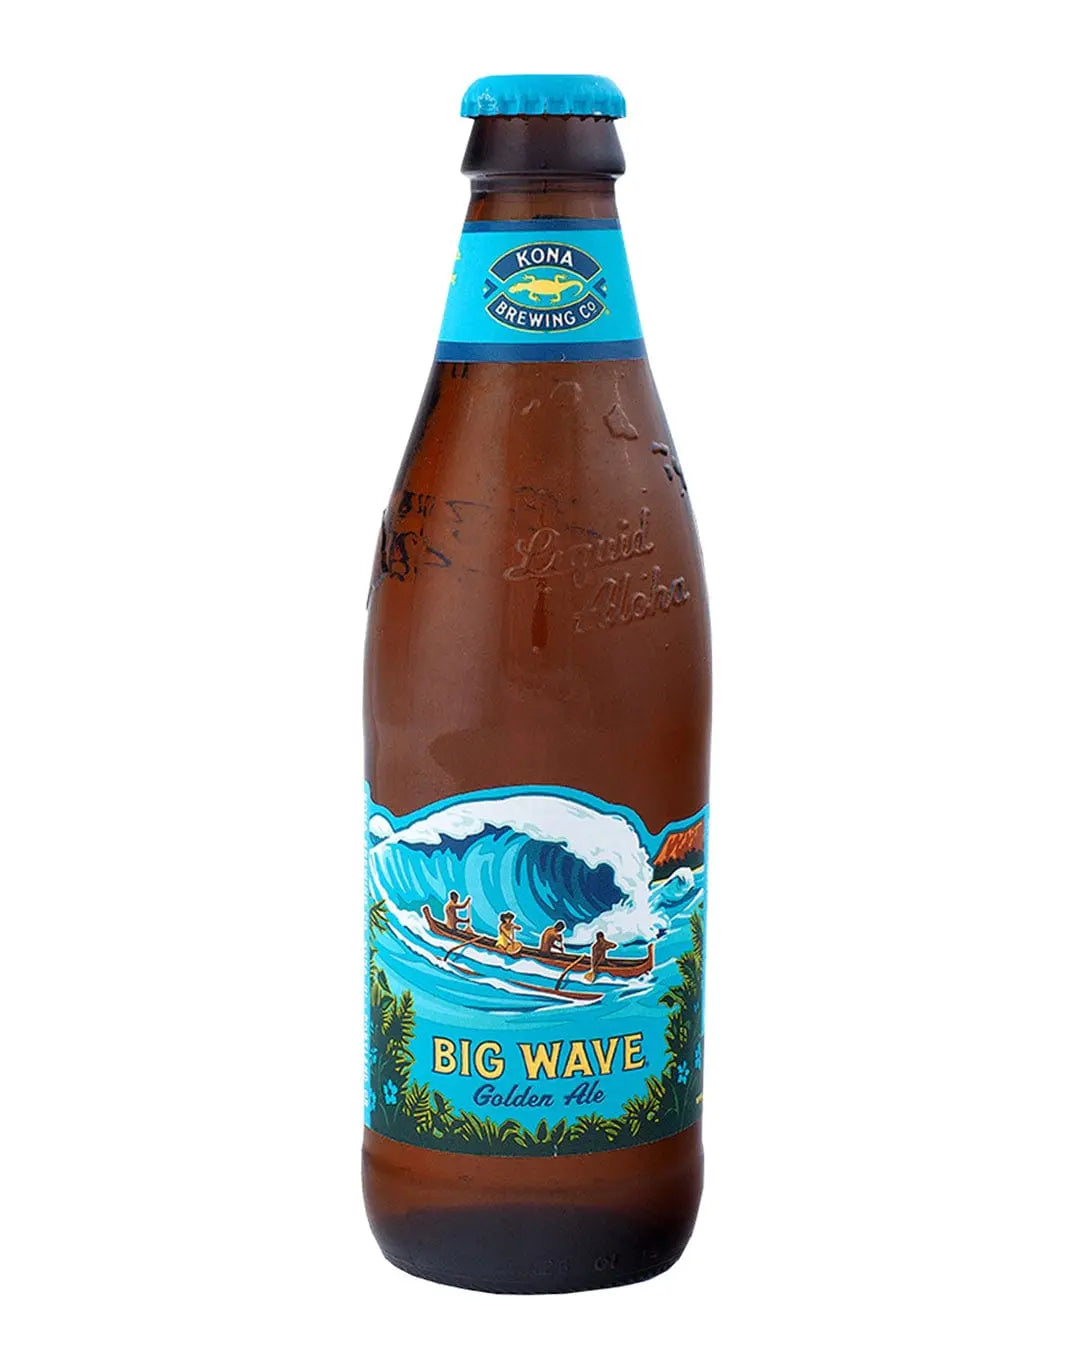 Kona Big Wave Ale Bottle, 335 ml Beer 796030214967